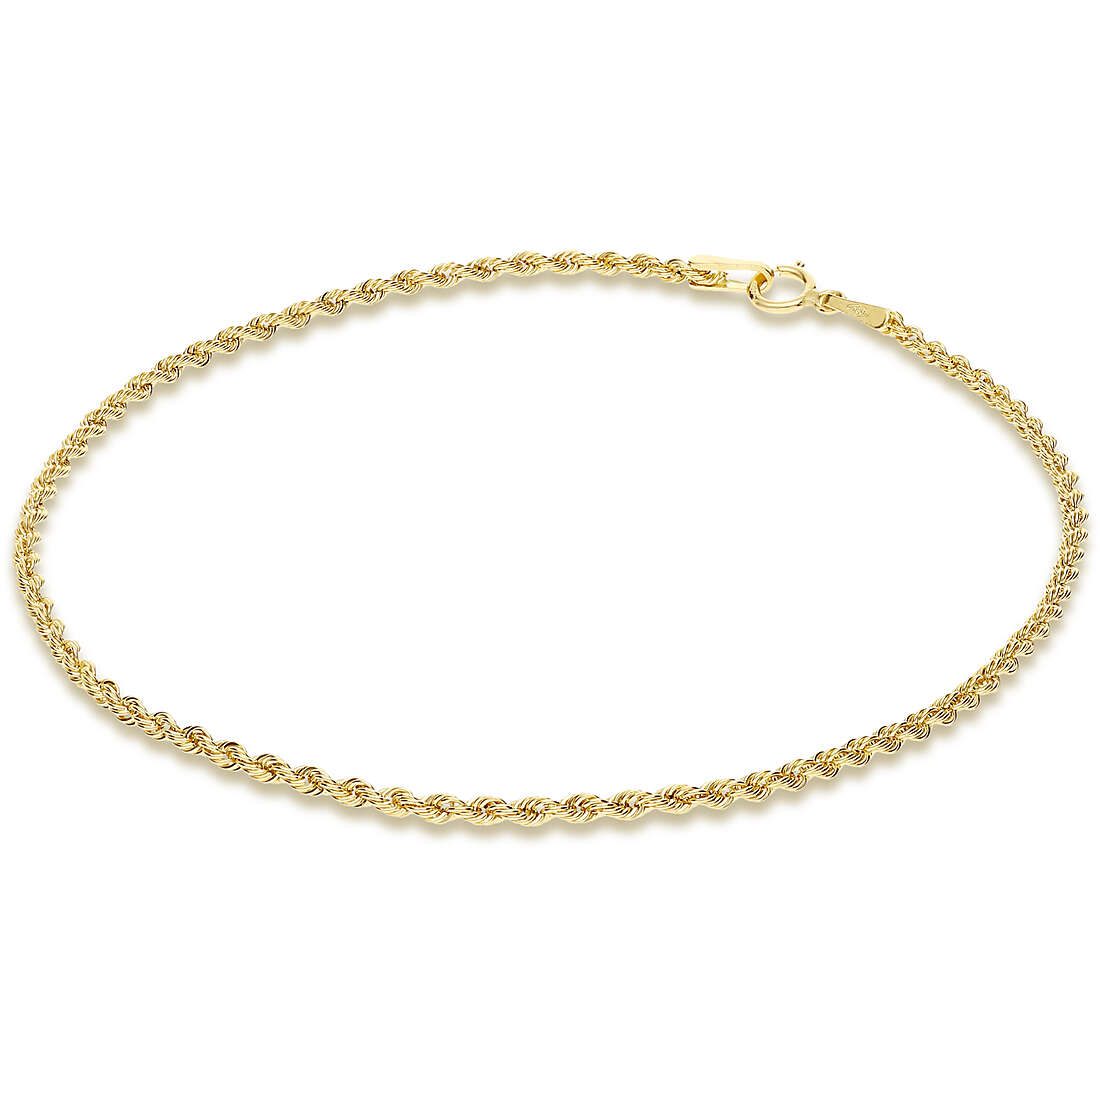 bracelet man jewellery GioiaPura Oro 750 GP-SVCL050GG19